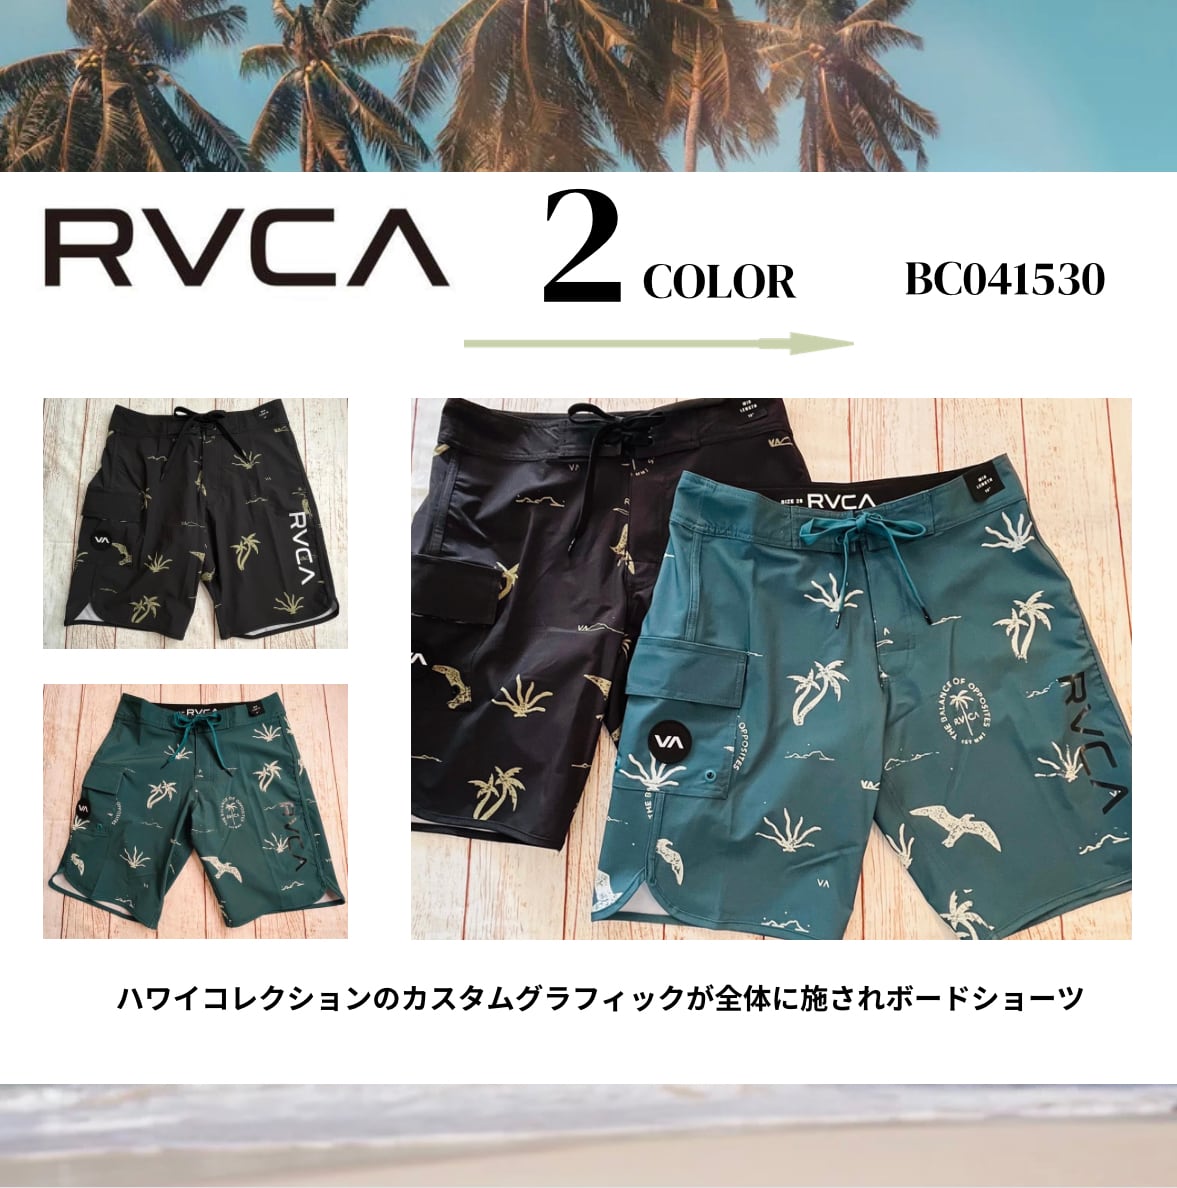 BC041530 RVCA メンズ 【HAWAII COLLECTION】 HULA HANDS